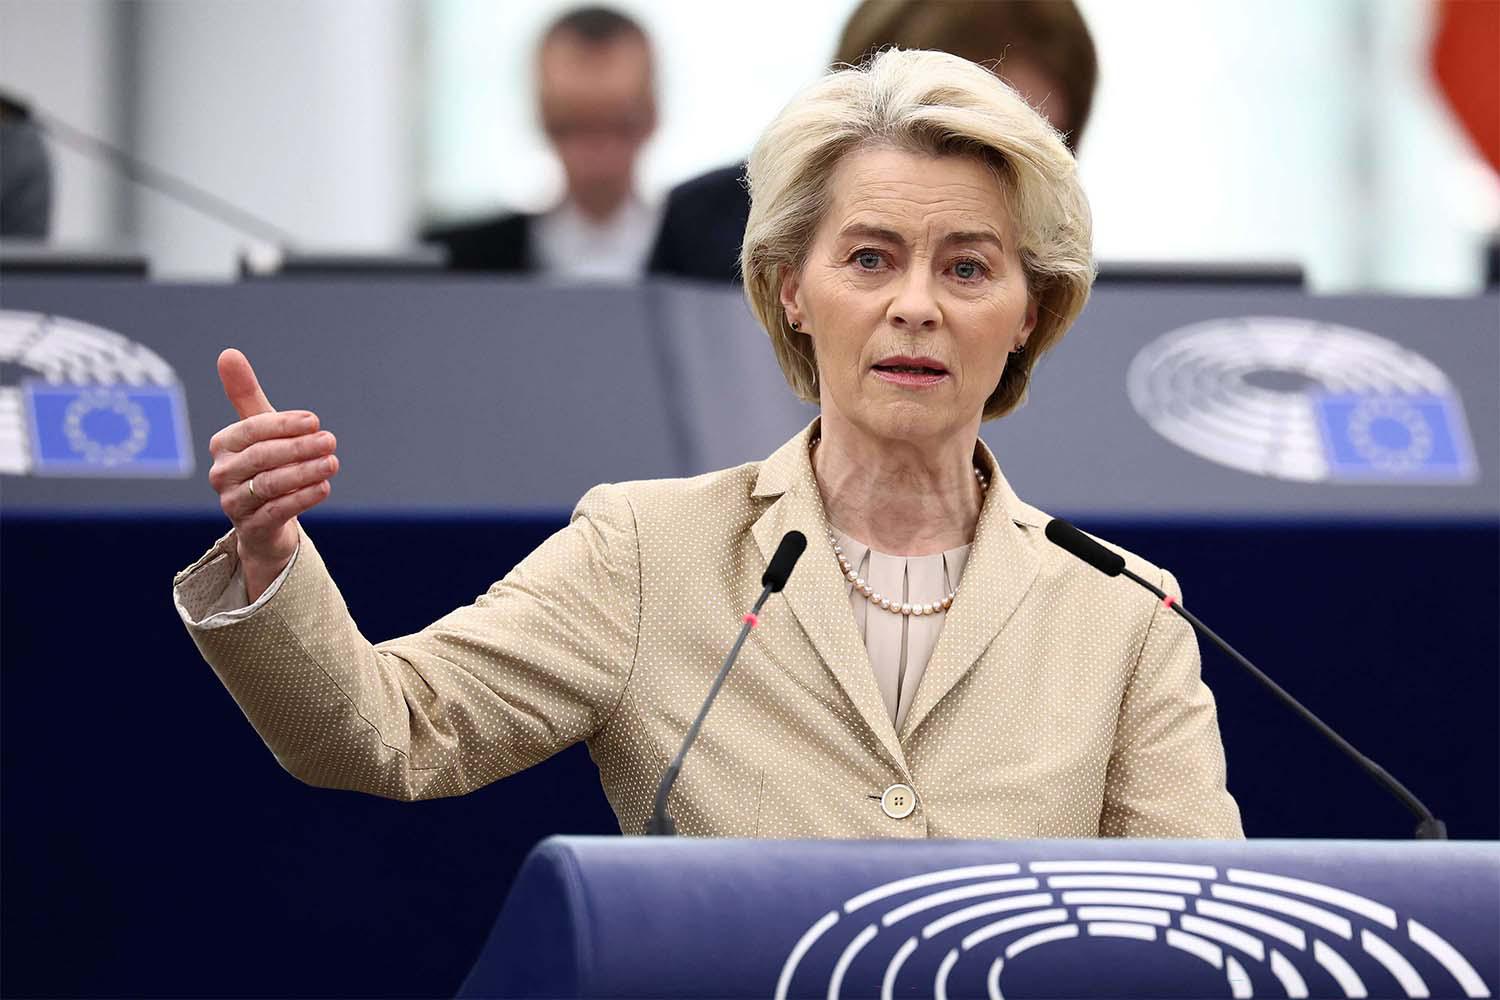 Ursula von der Leyen says the EU continues its commitment alongside Tunisia